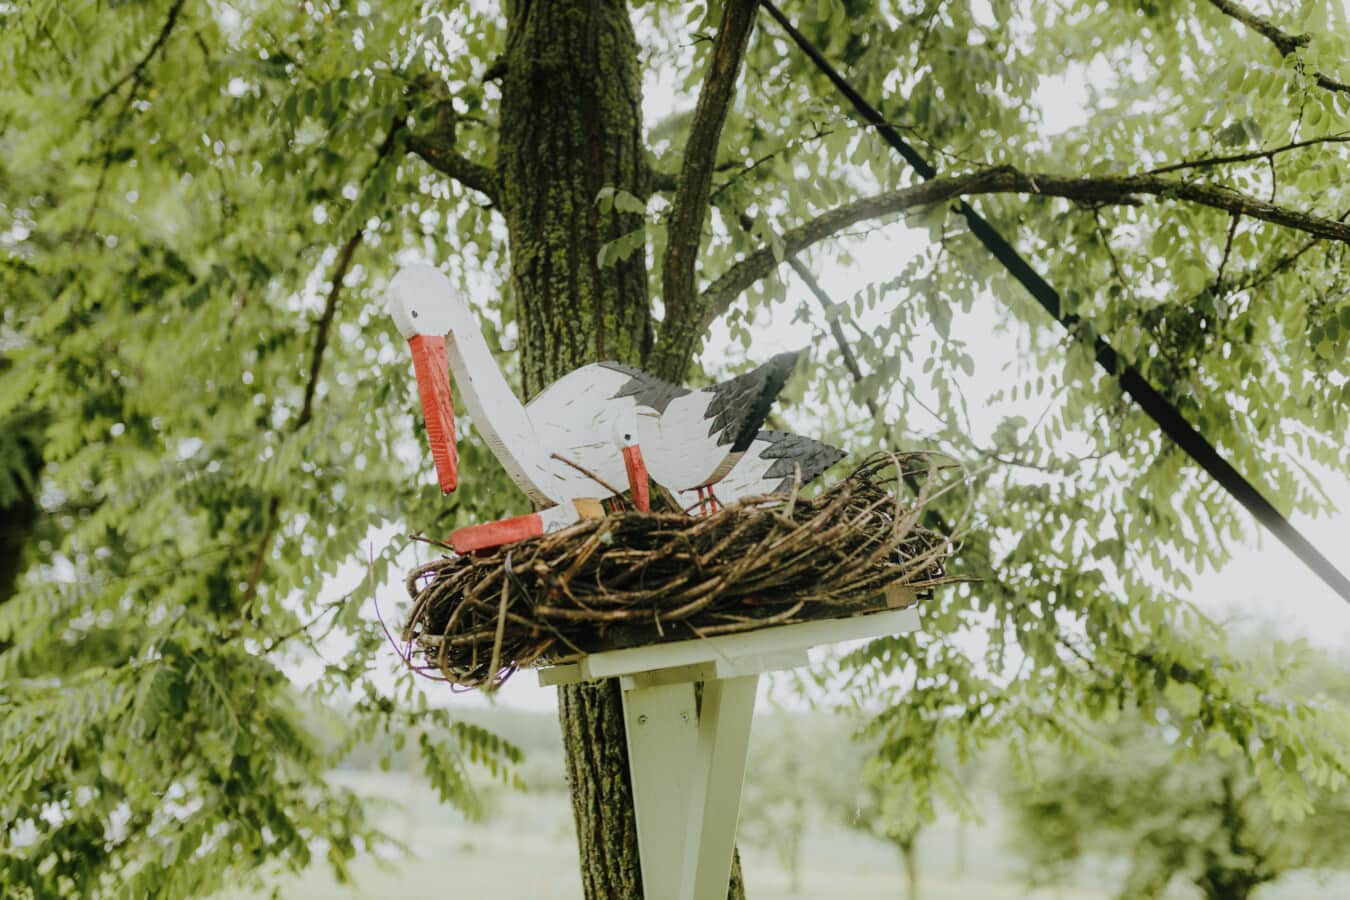 white stork, wooden, nest, decoration, tree, nature, outdoors, leaf, garden, park